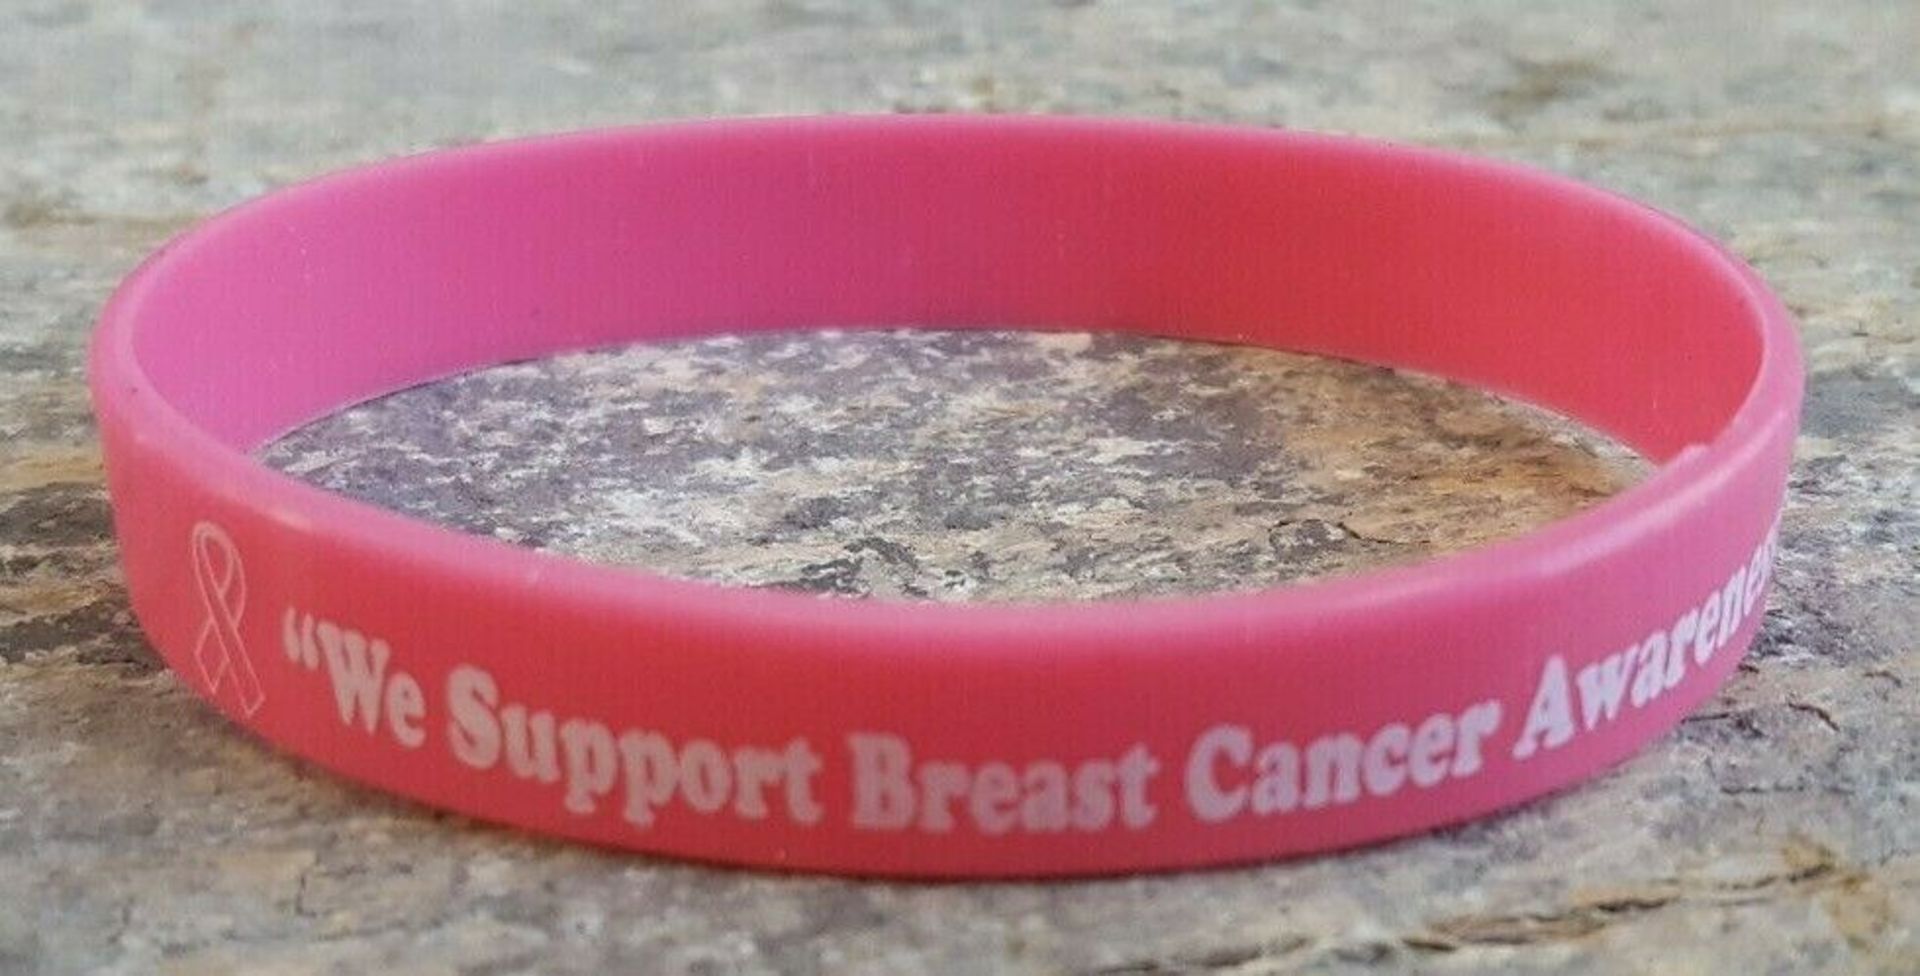 29 X WE SUPPORT BREAST CANCER AWARENESS PINK BRACELETS - Image 2 of 4